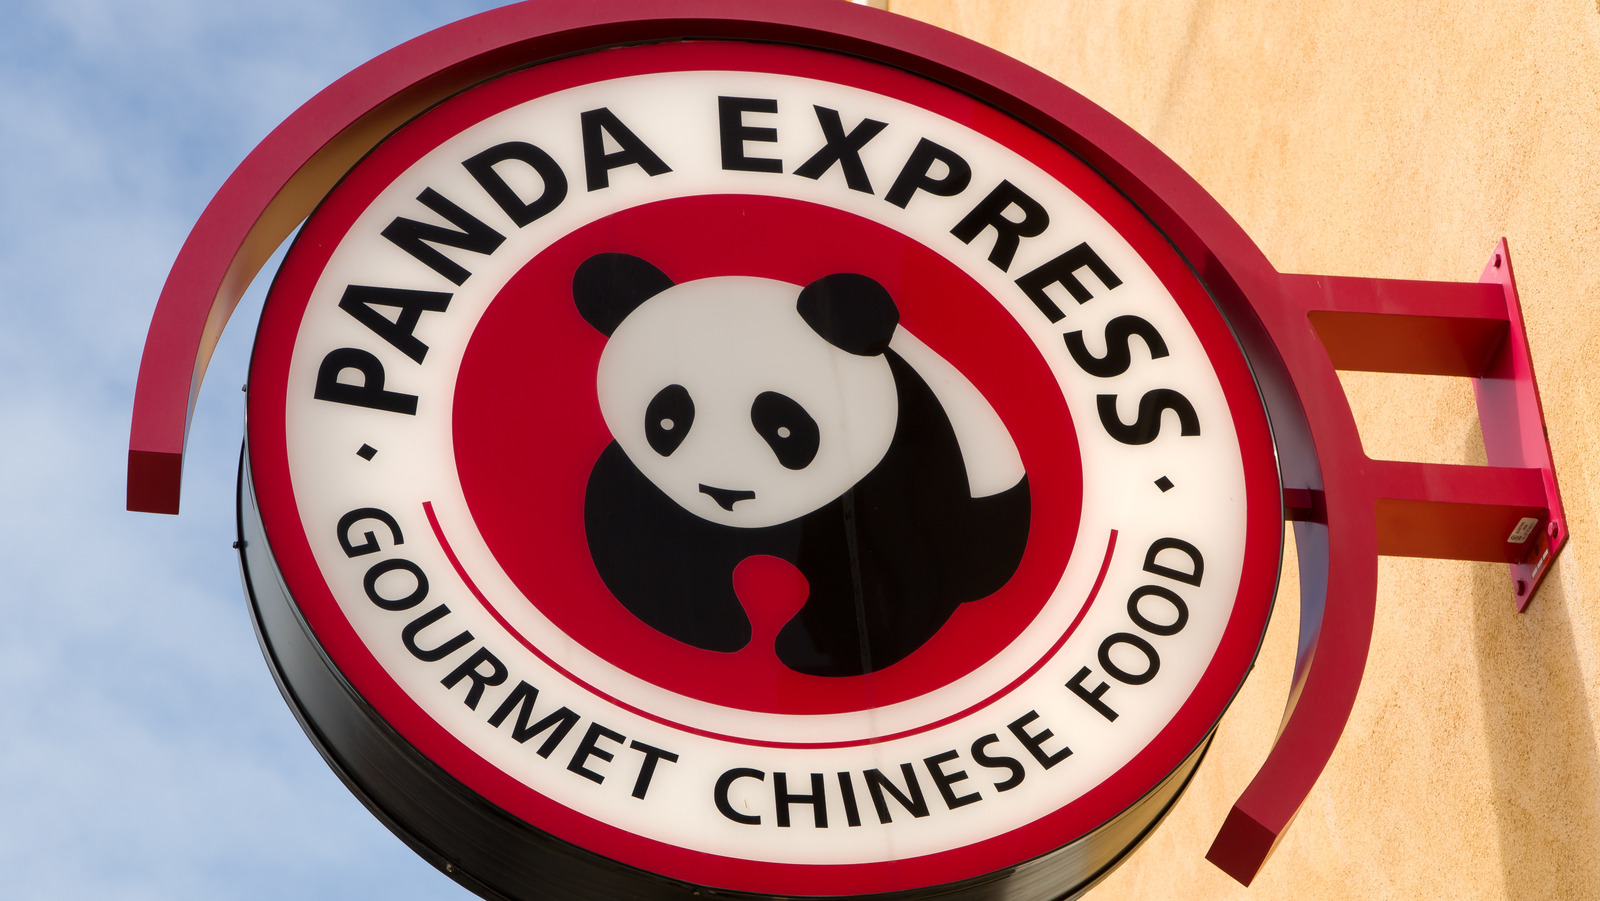 panda express secret menu